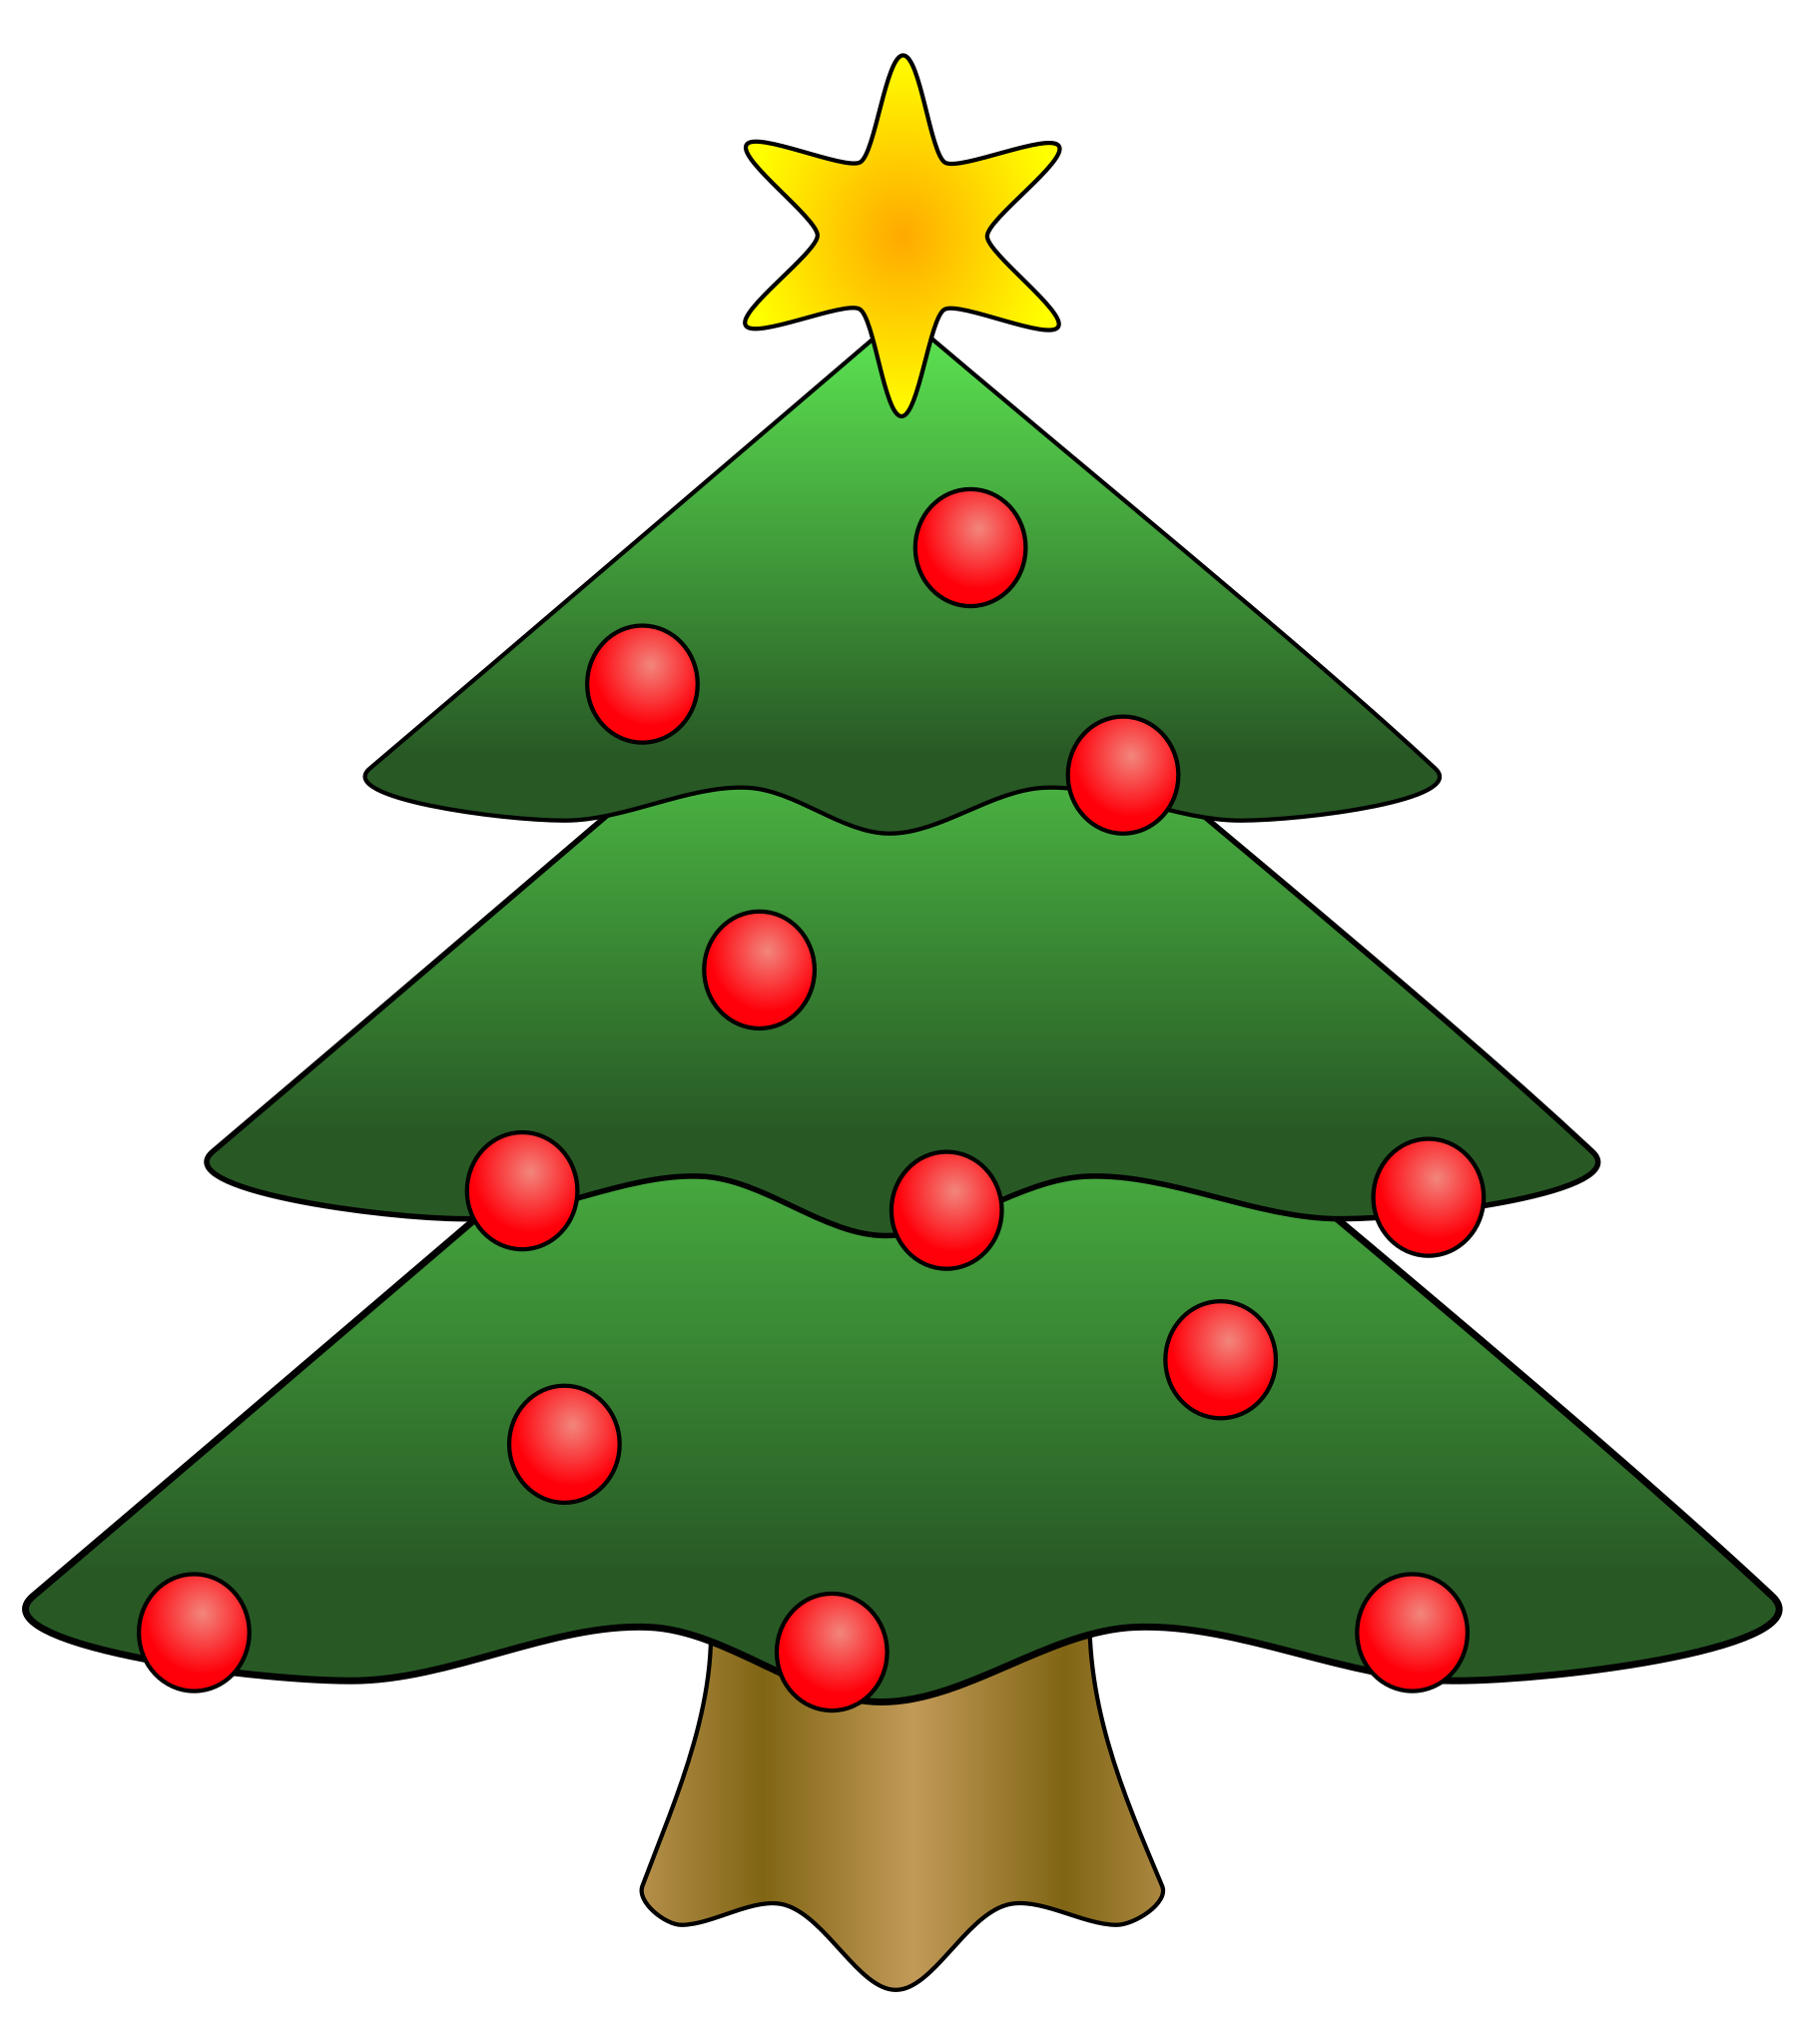 Файл:Christmas tree 02.svg — Википедия